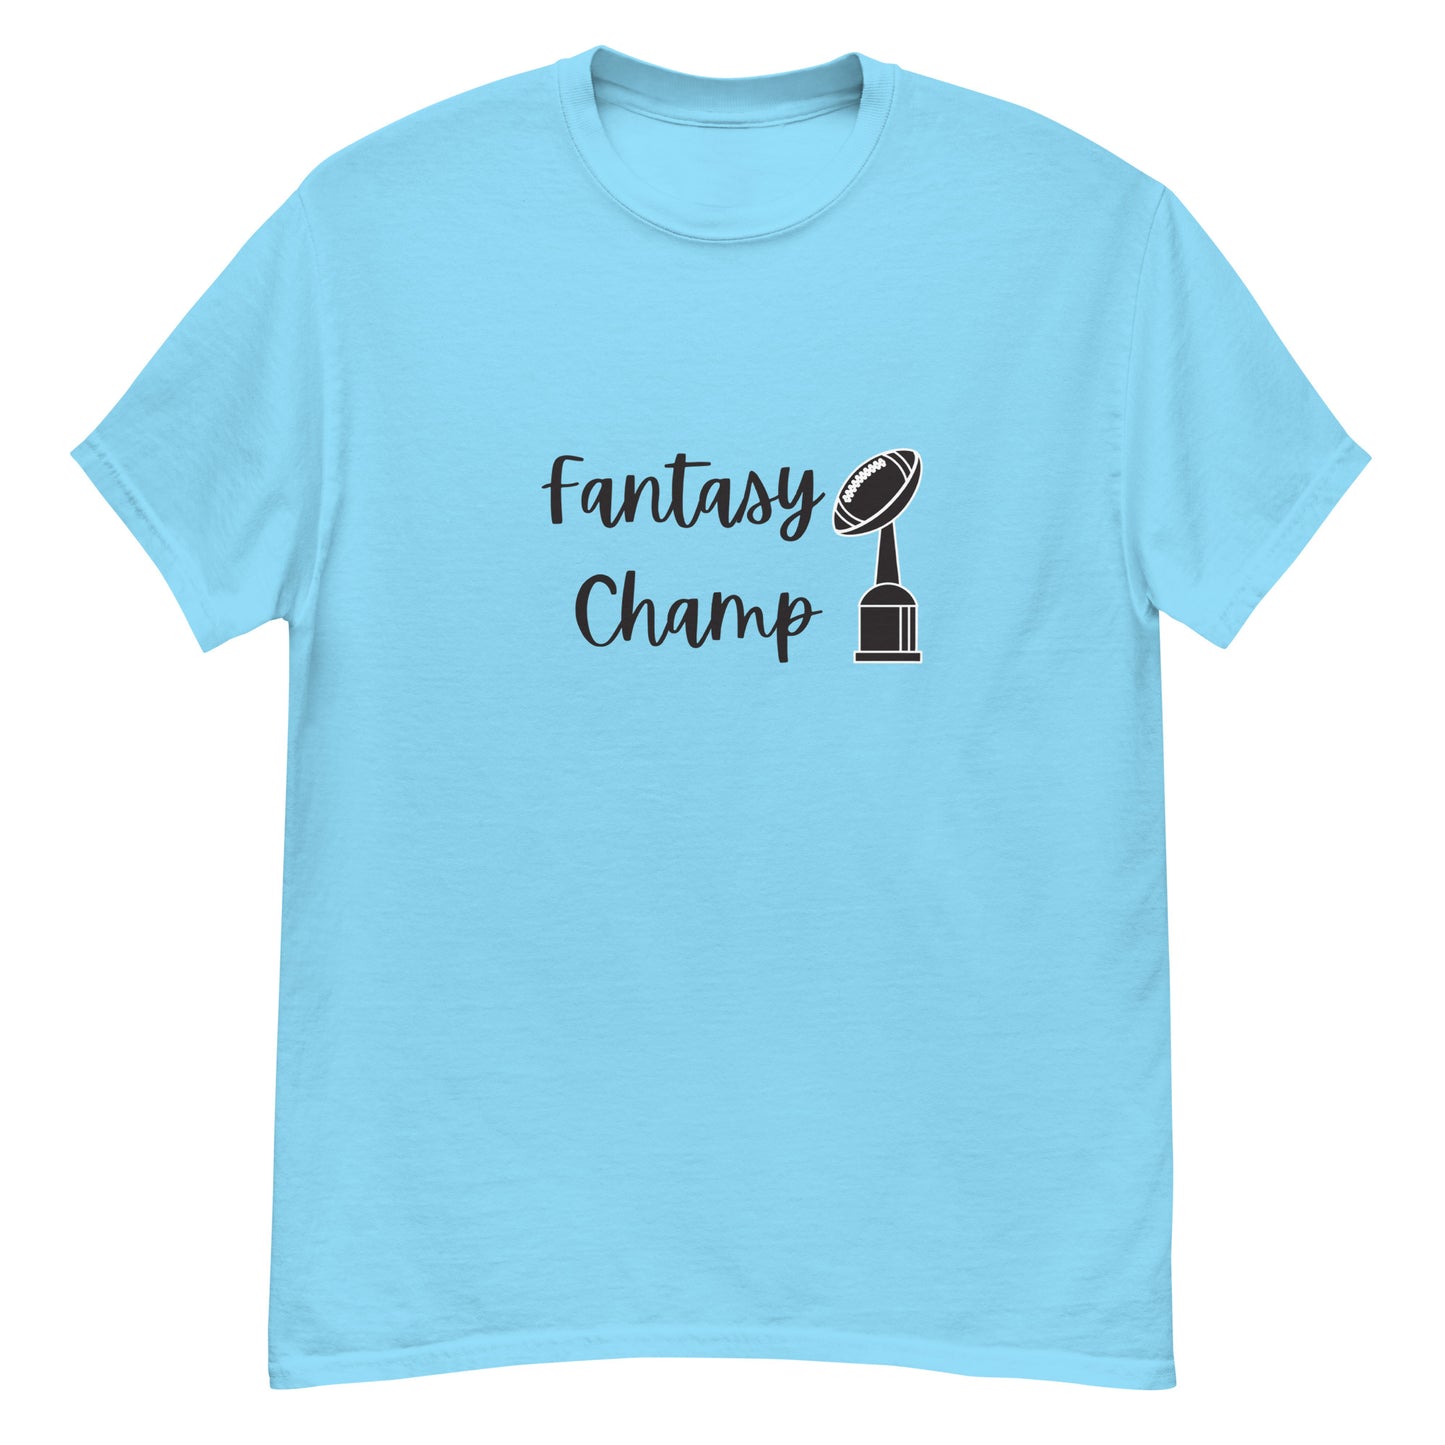 Fantasy Champ Men's classic tee